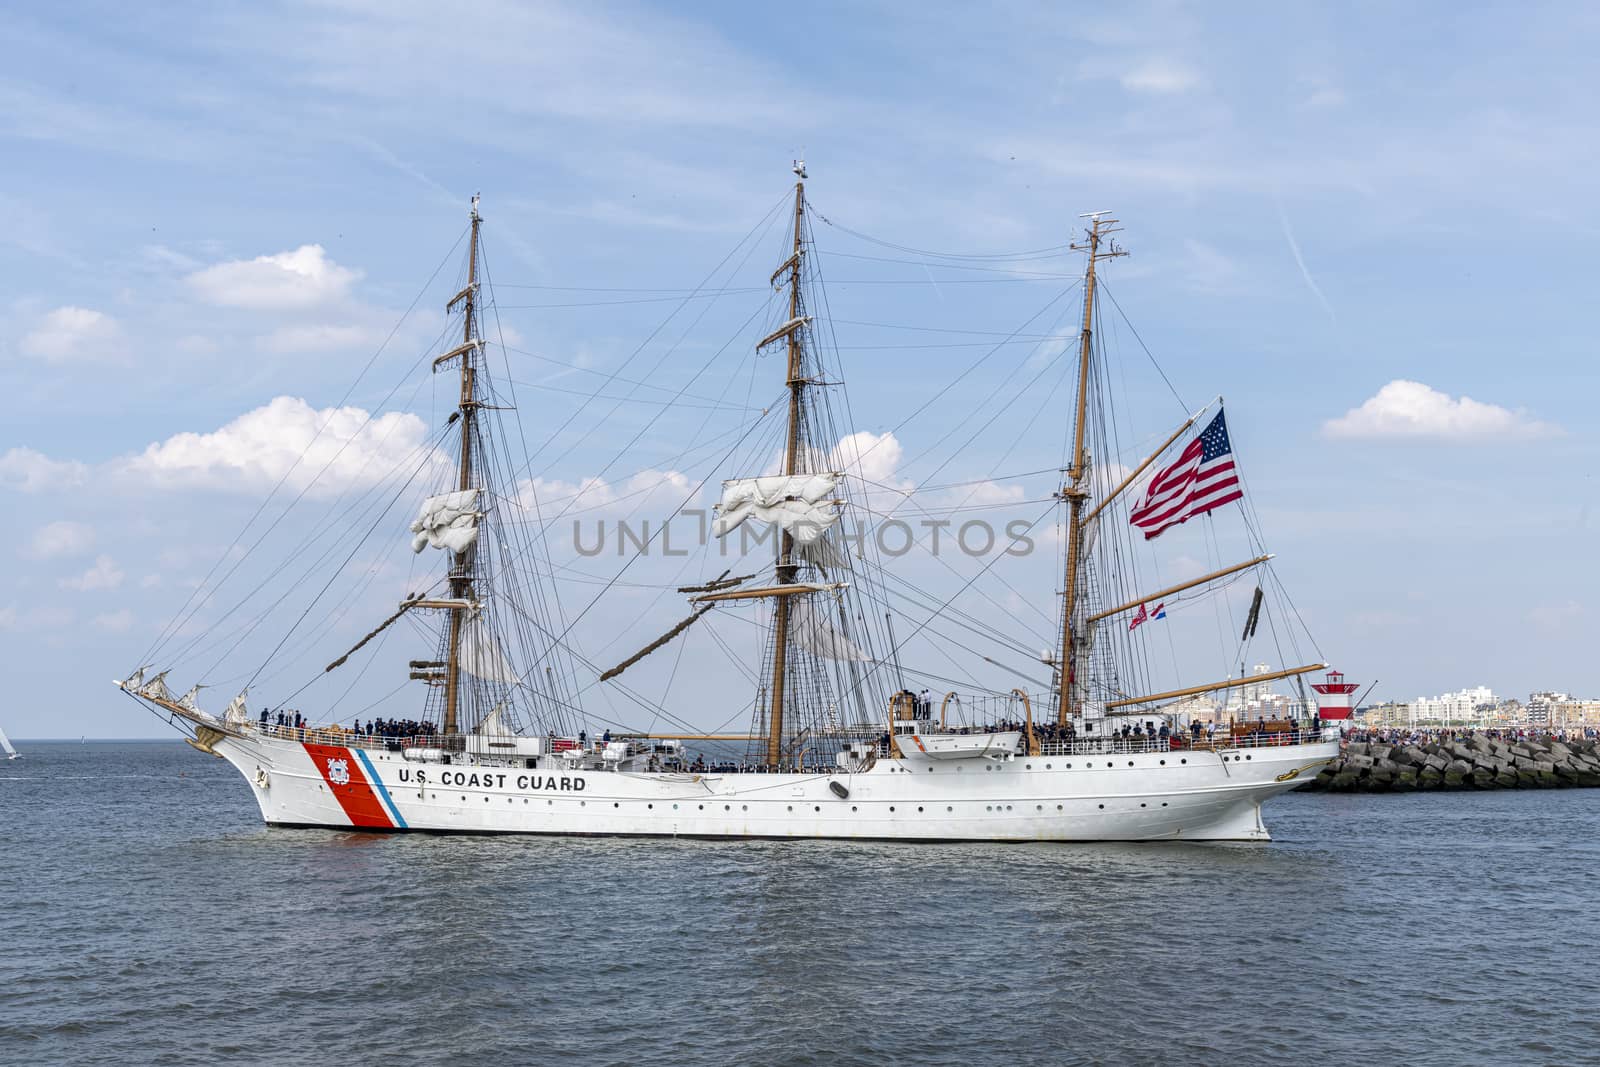 THE HAGUE, 23 June 2019 - US Coast Guard antique tall ship, vessel leaving the harbor of The Hague, Scheveningen under a sunny and blue sky